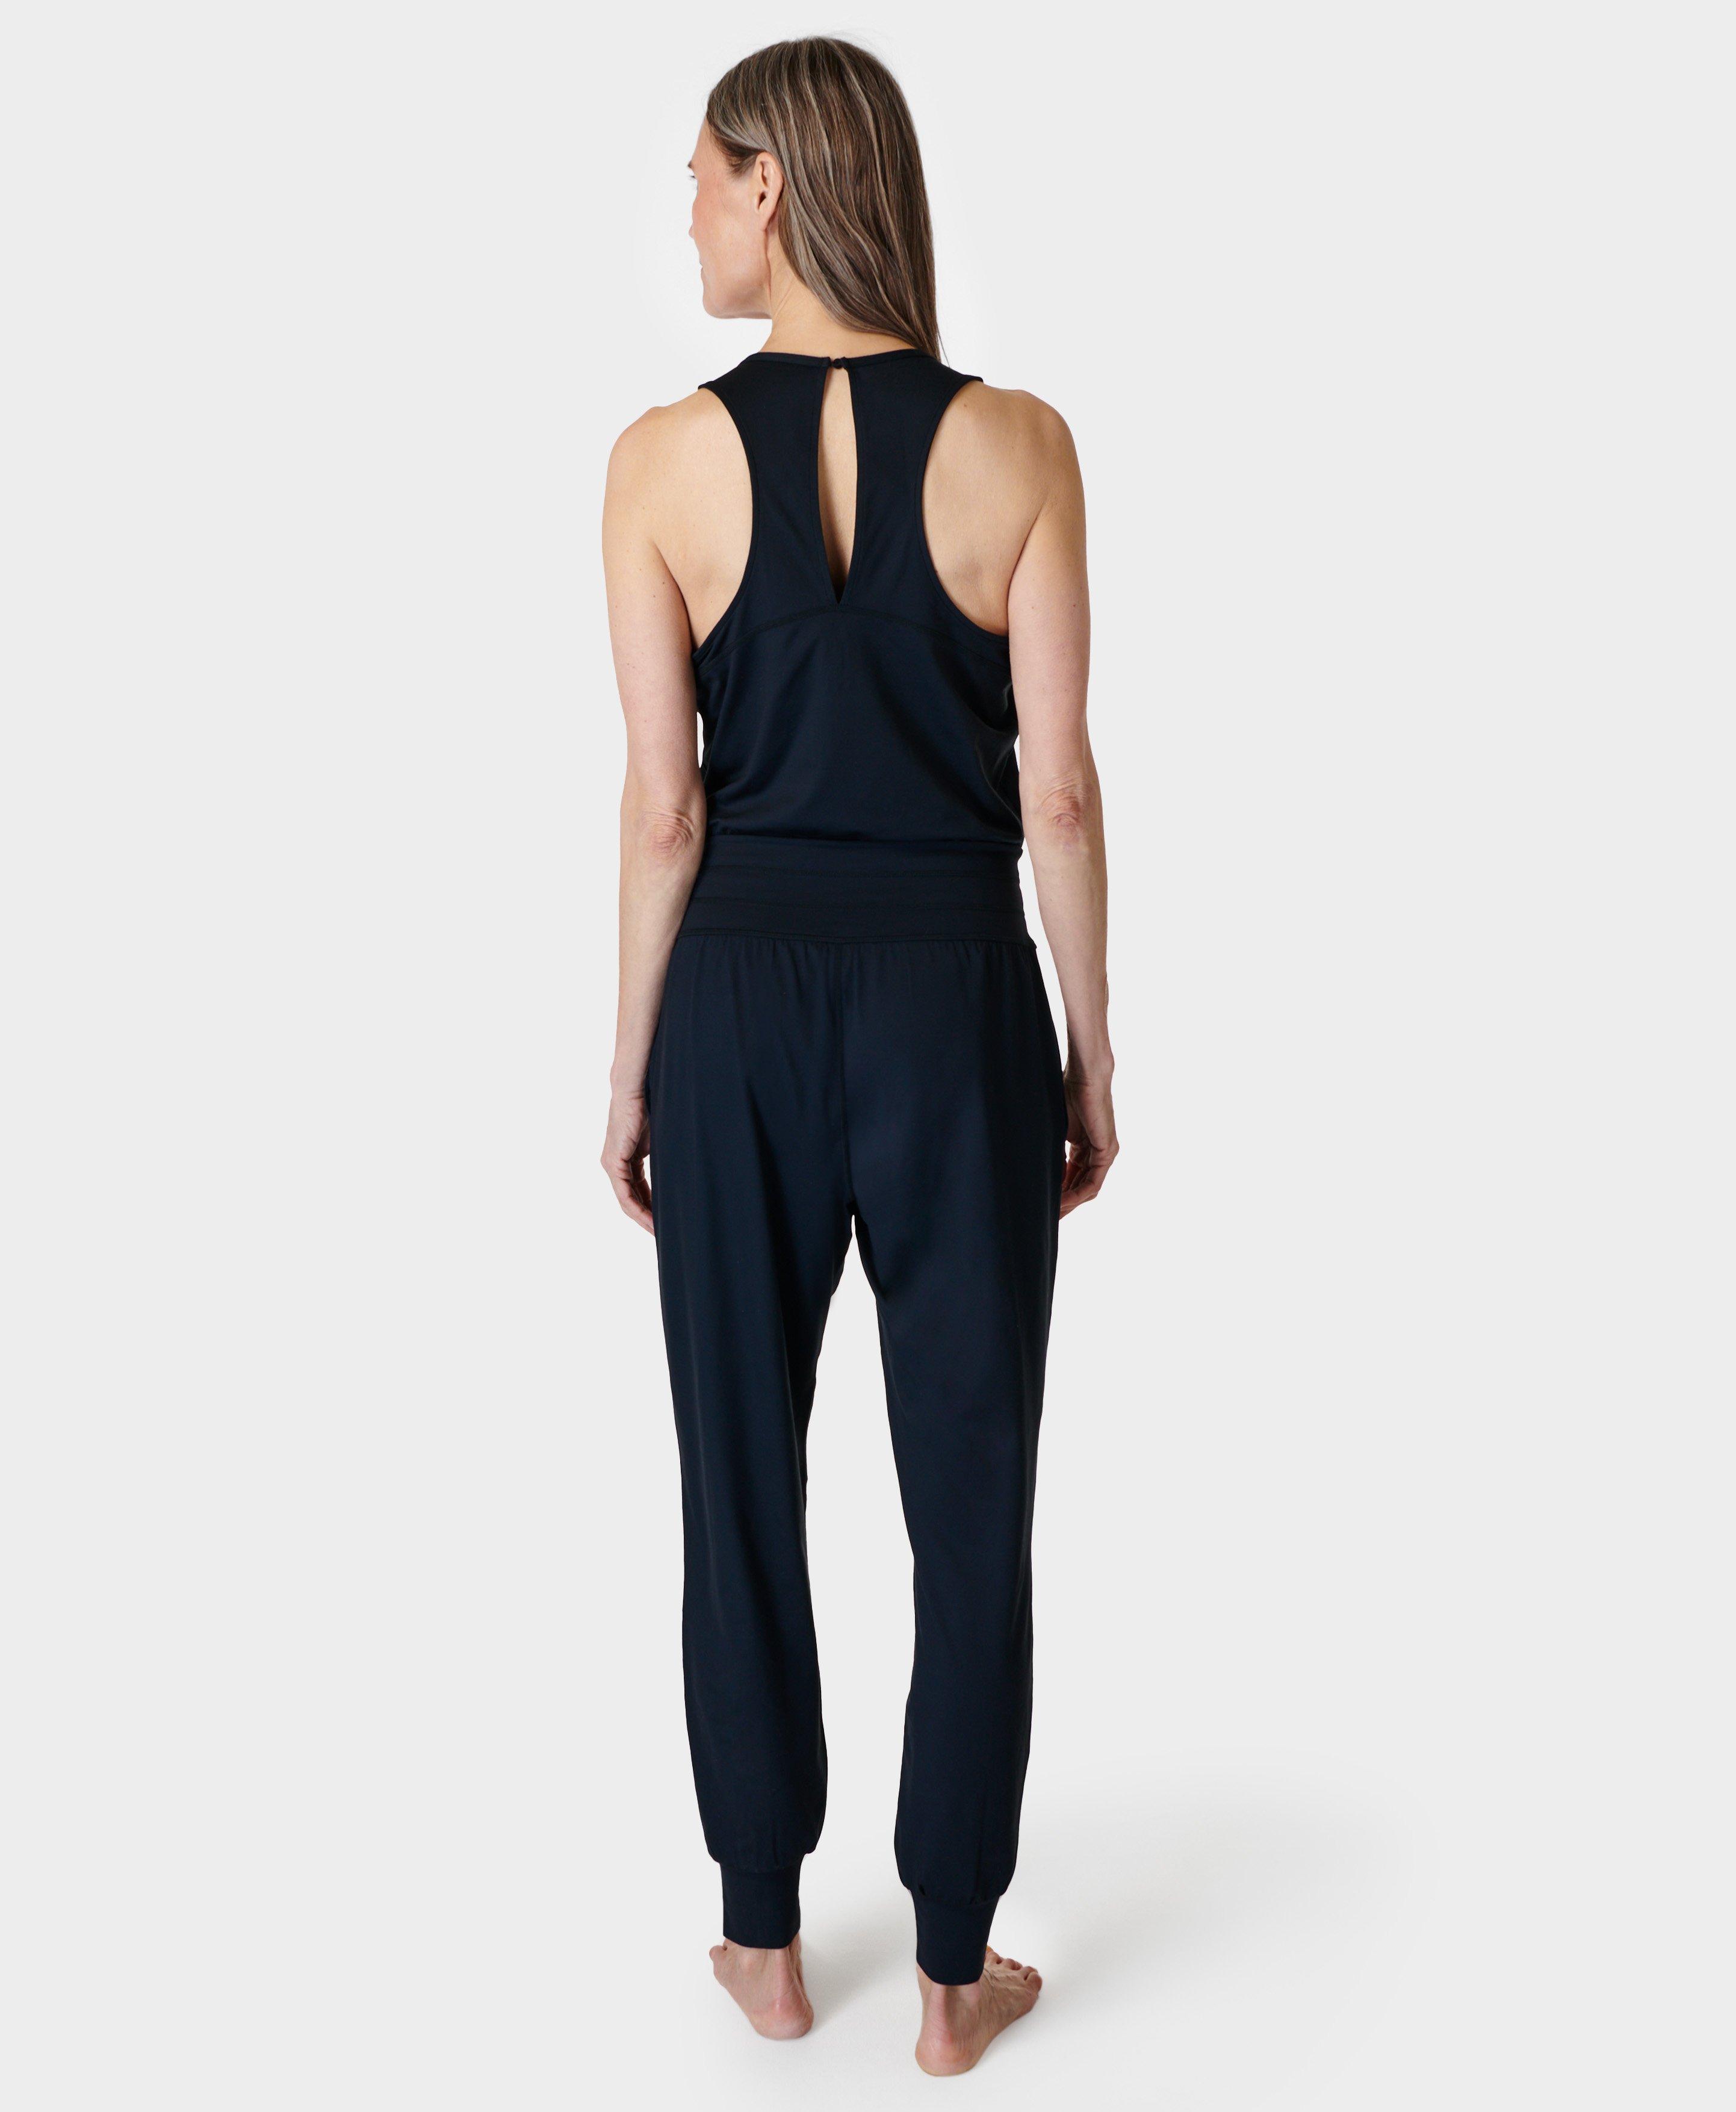 Gaia Yoga Dress - Black, Women's Dresses and Jumpsuits